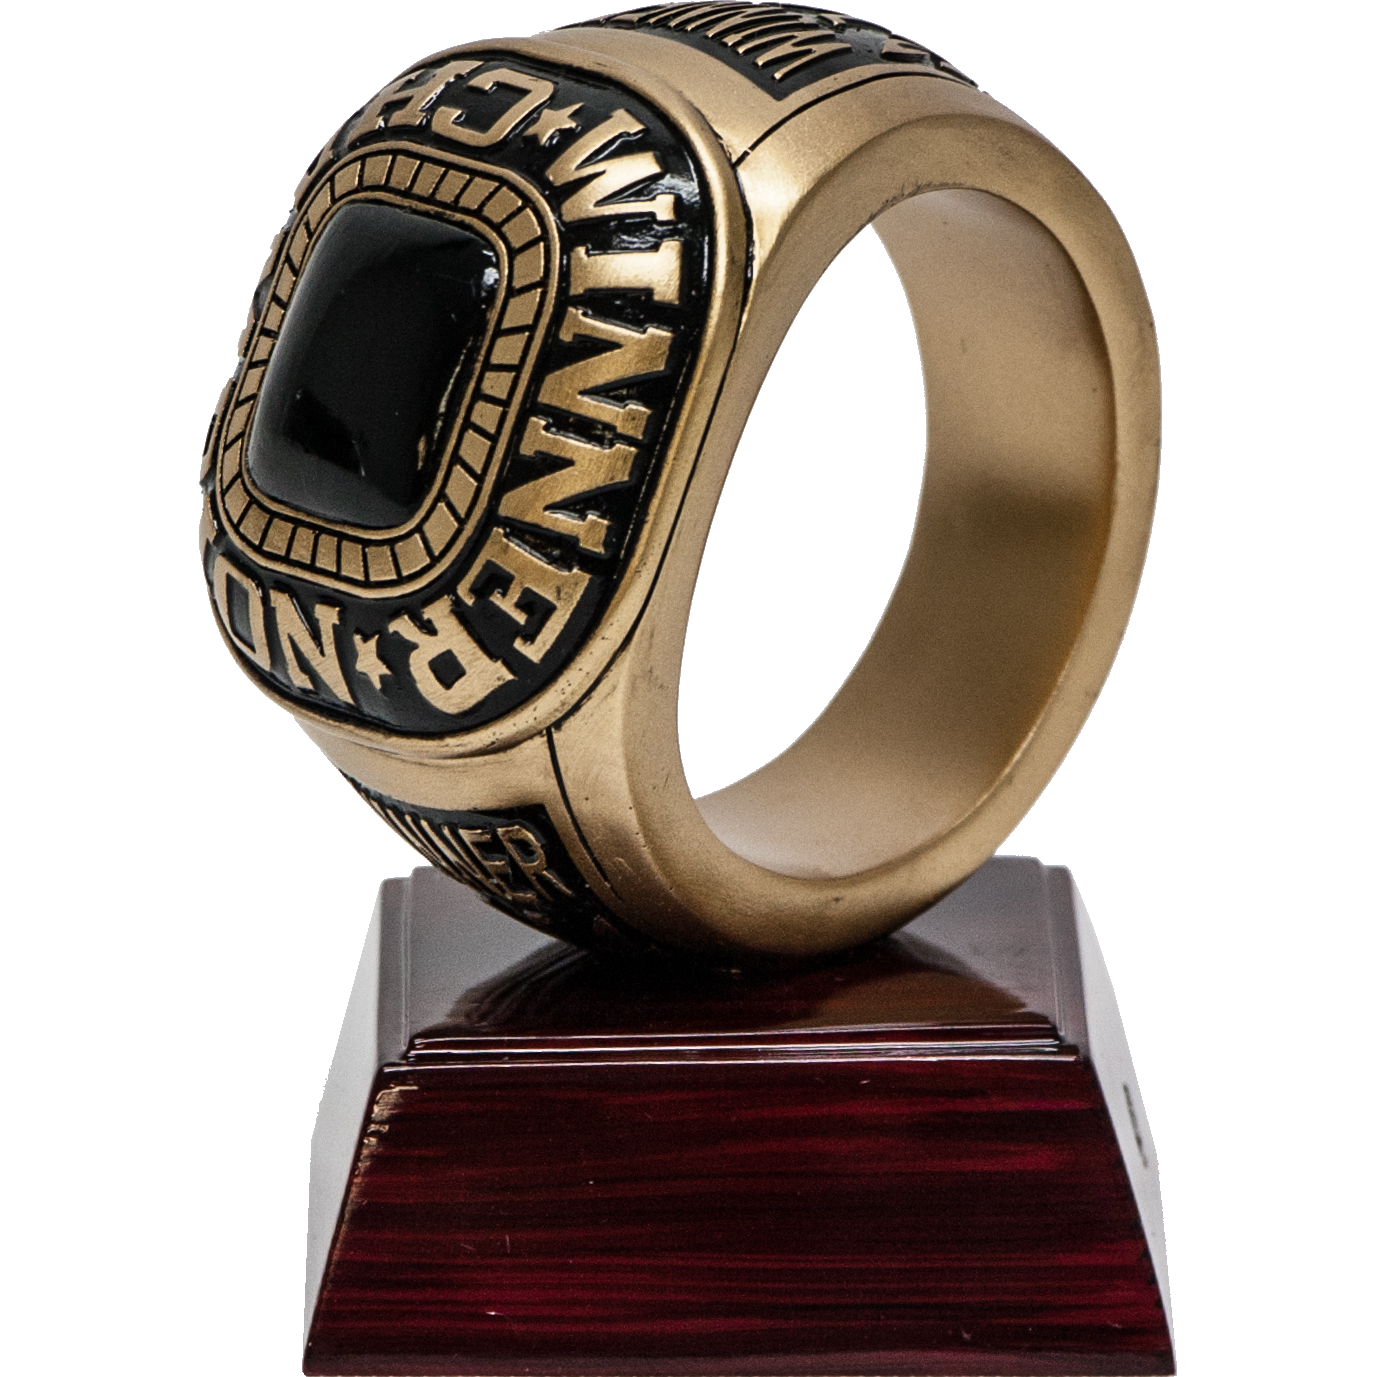 Resin Champions Ring Award